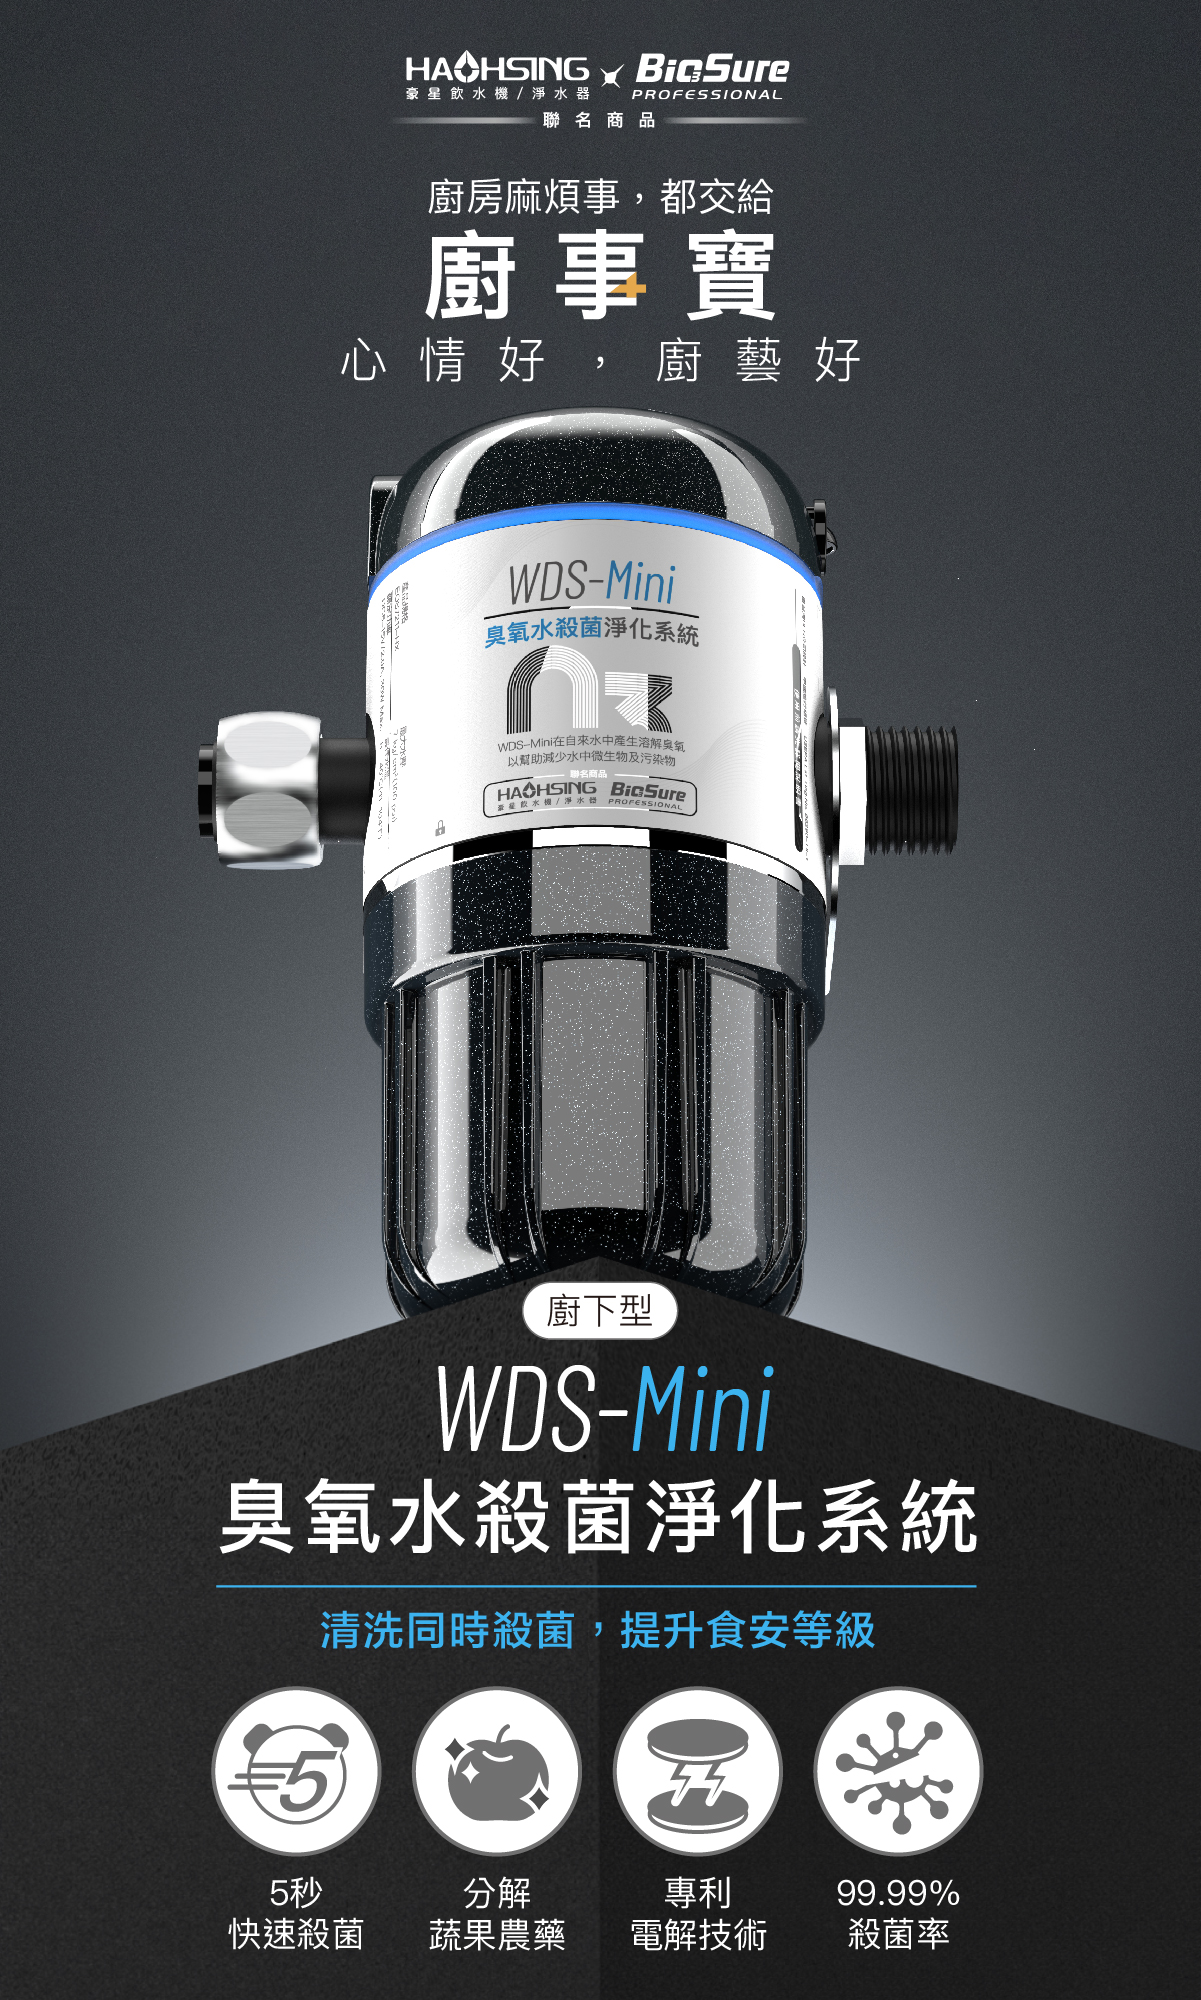 WDS-Mini臭氧水殺菌淨化系統